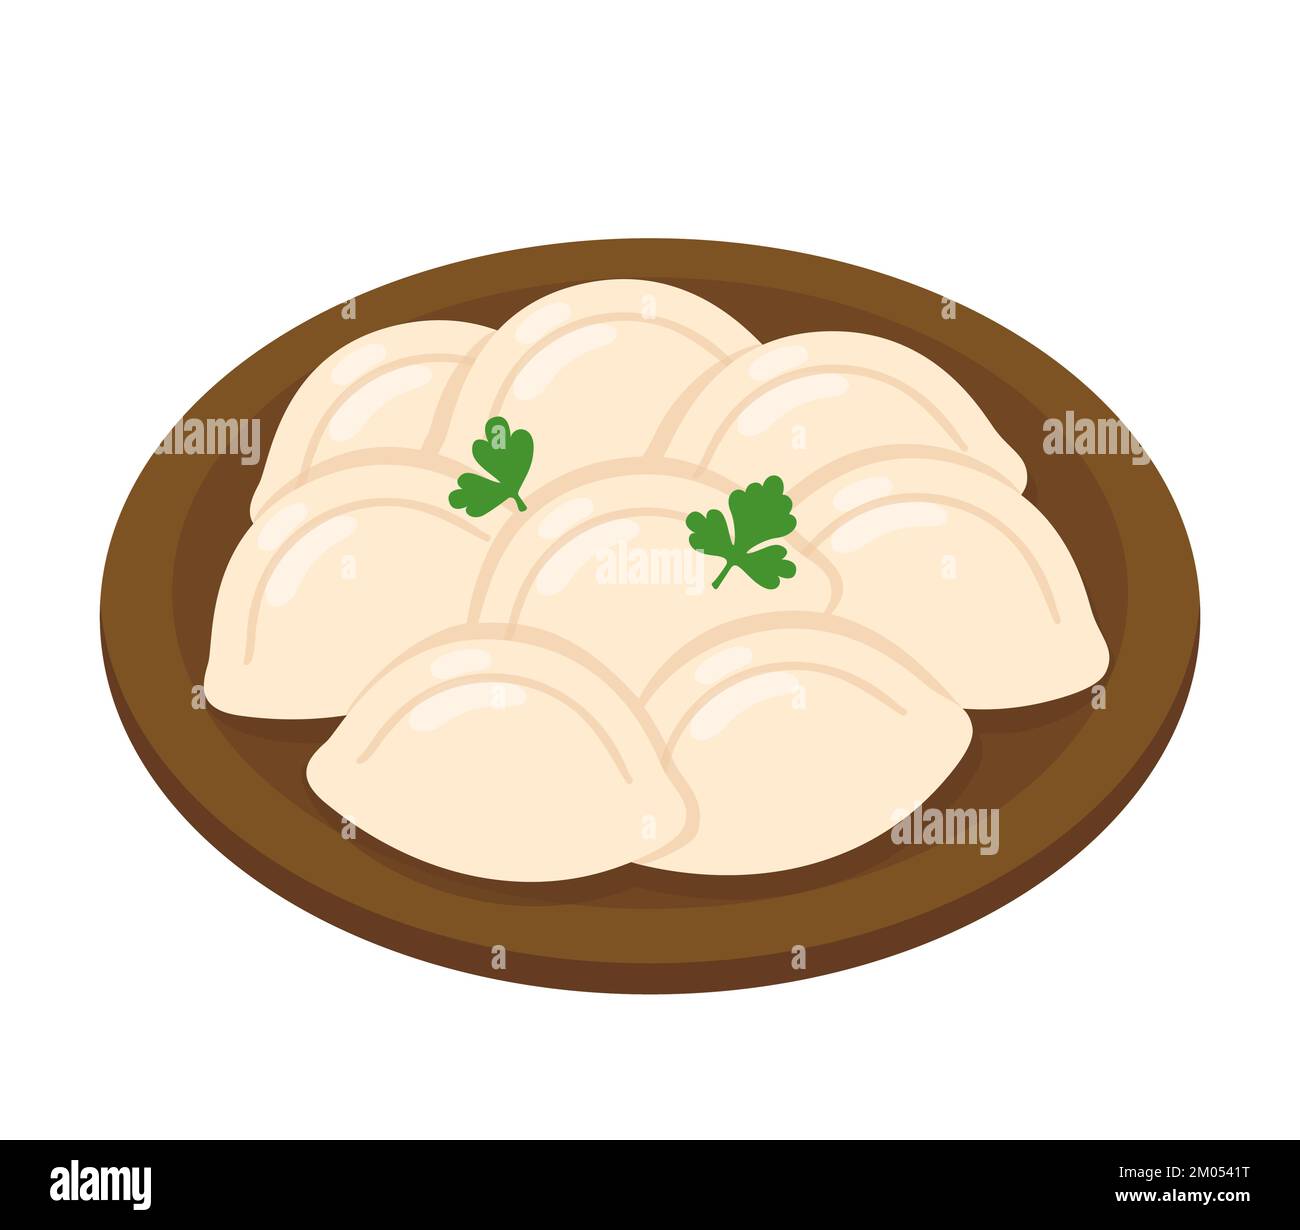 Pierogi or varenyky, traditional Eastern European dumplings on a plate. Cartoon vector illustration. Stock Vector